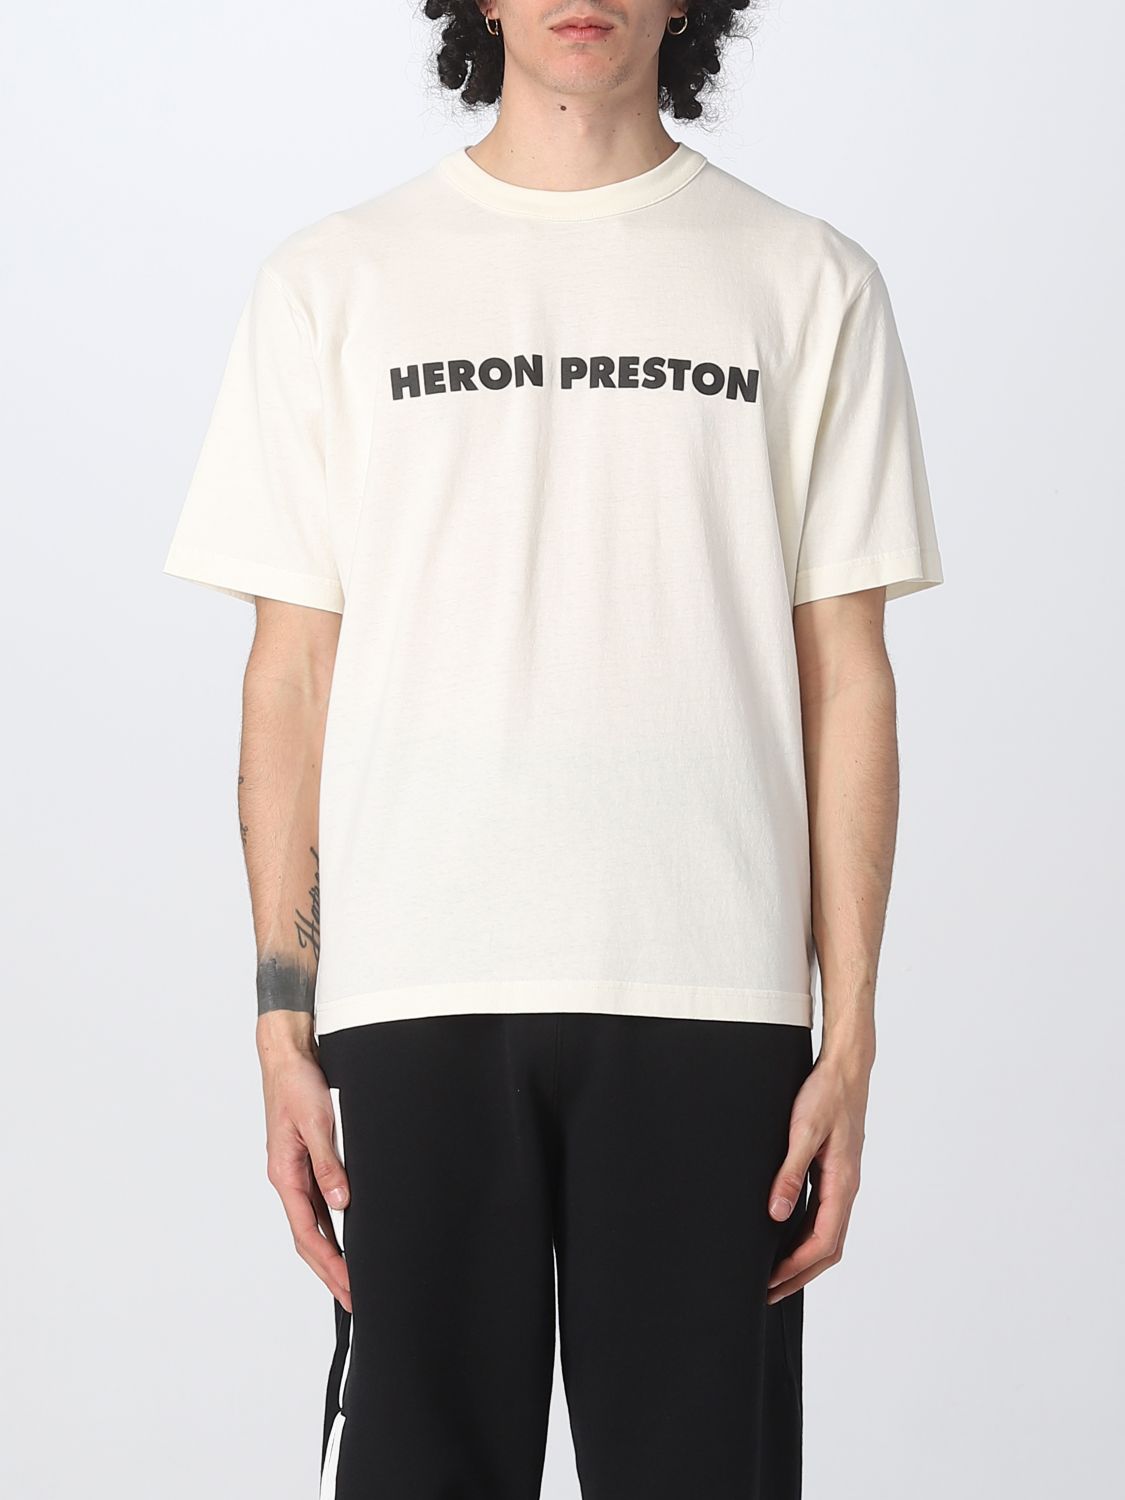 T-shirt Heron Preston: Heron Preston t-shirt for men white 1 1